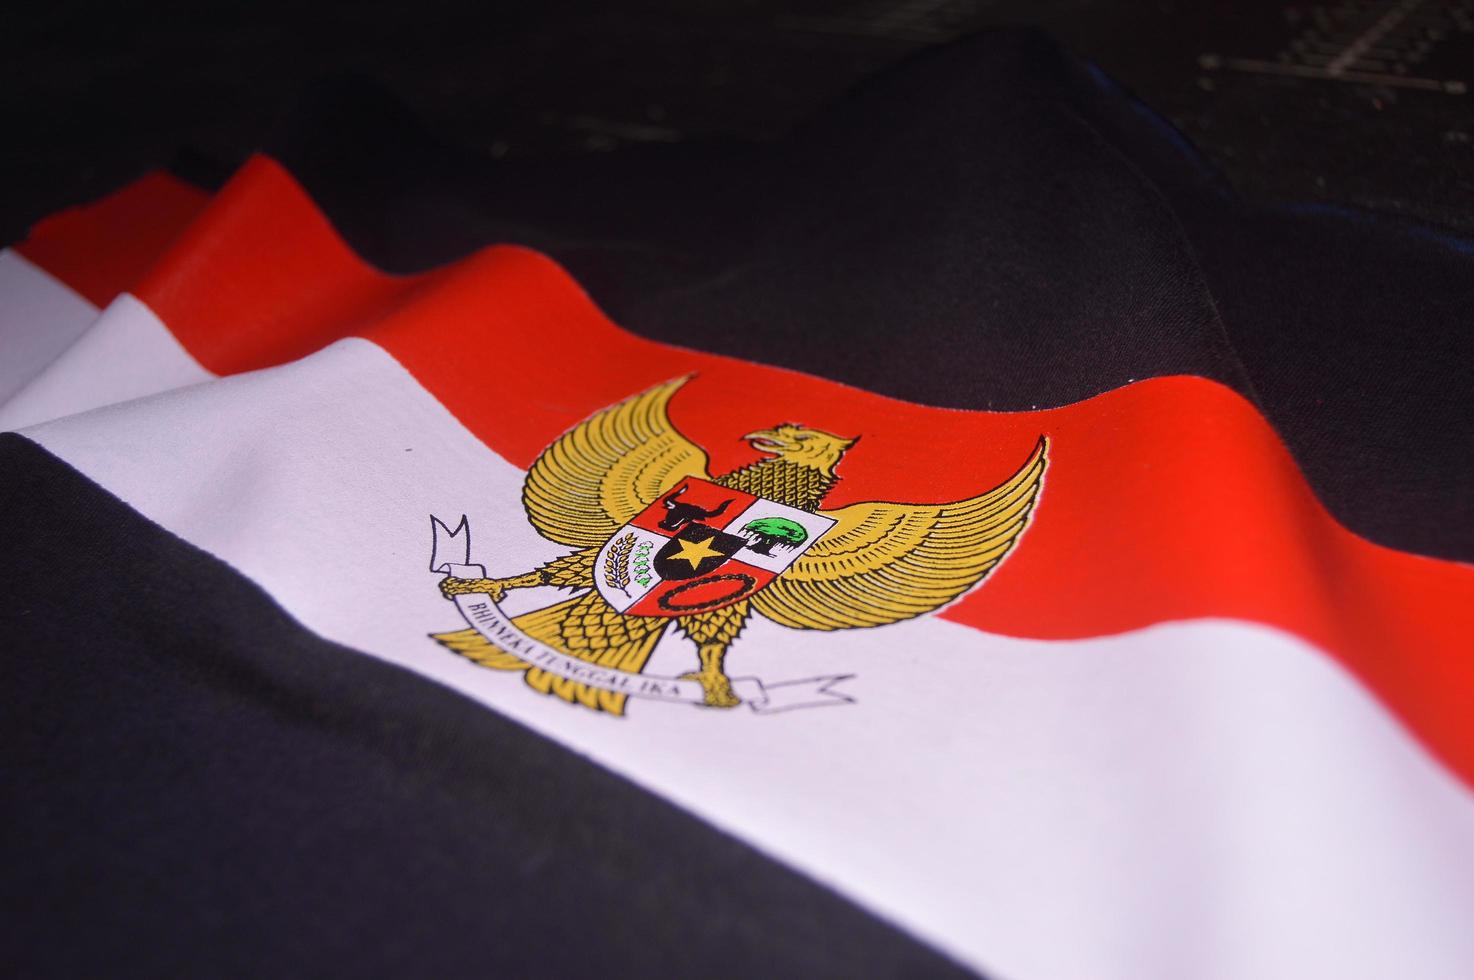 gresik, indonésie, 2022 - logo garuda et rouge et blanc sur tissu photo